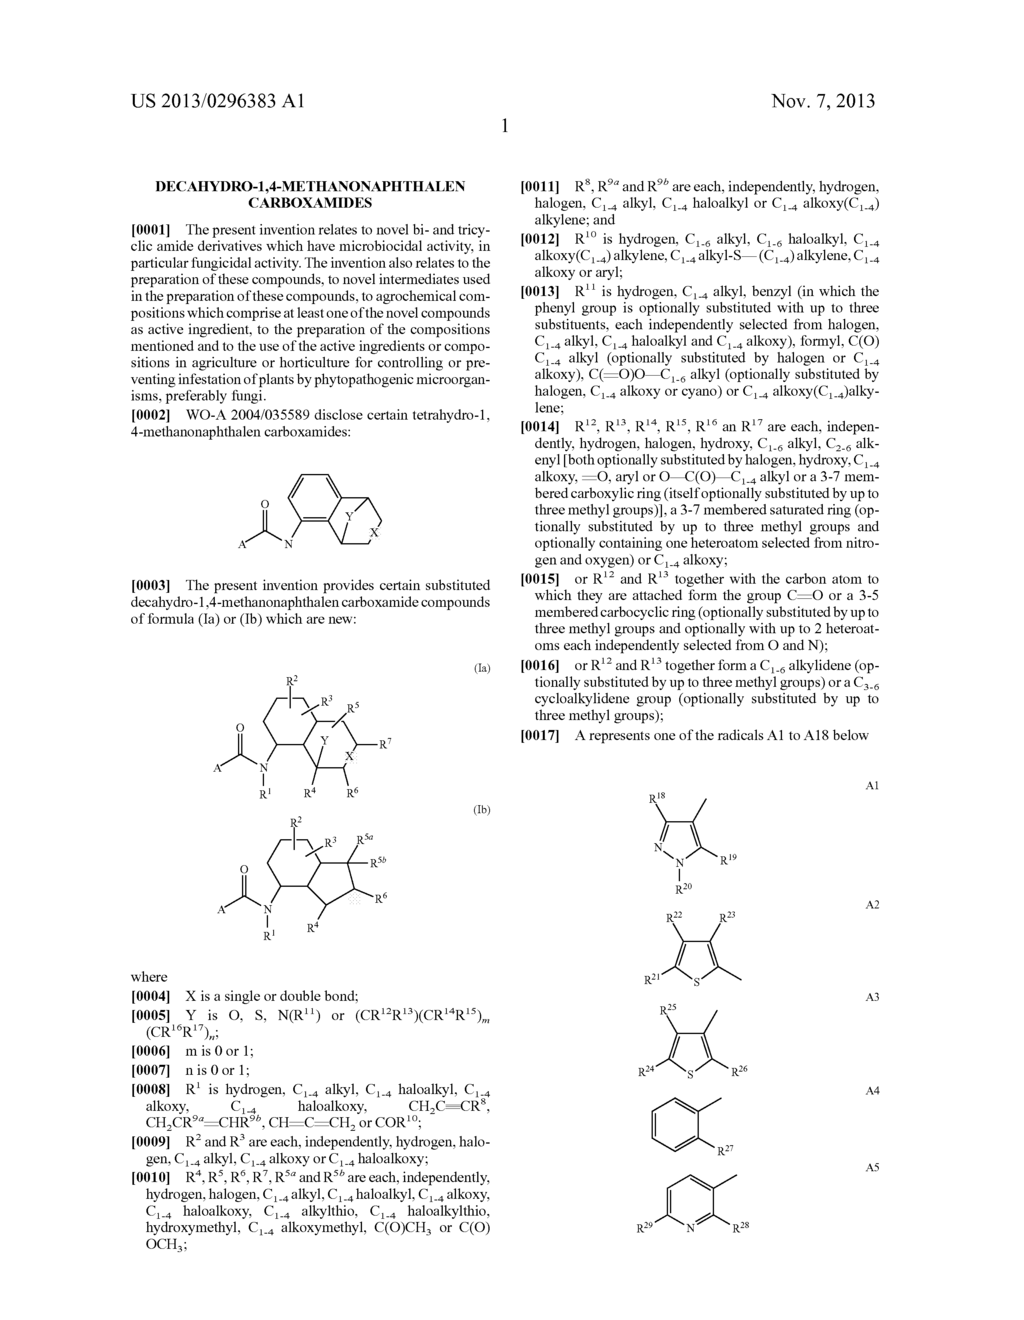 DECAHYDRO-1,4-METHANONAPHTHALEN CARBOXAMIDES - diagram, schematic, and image 02